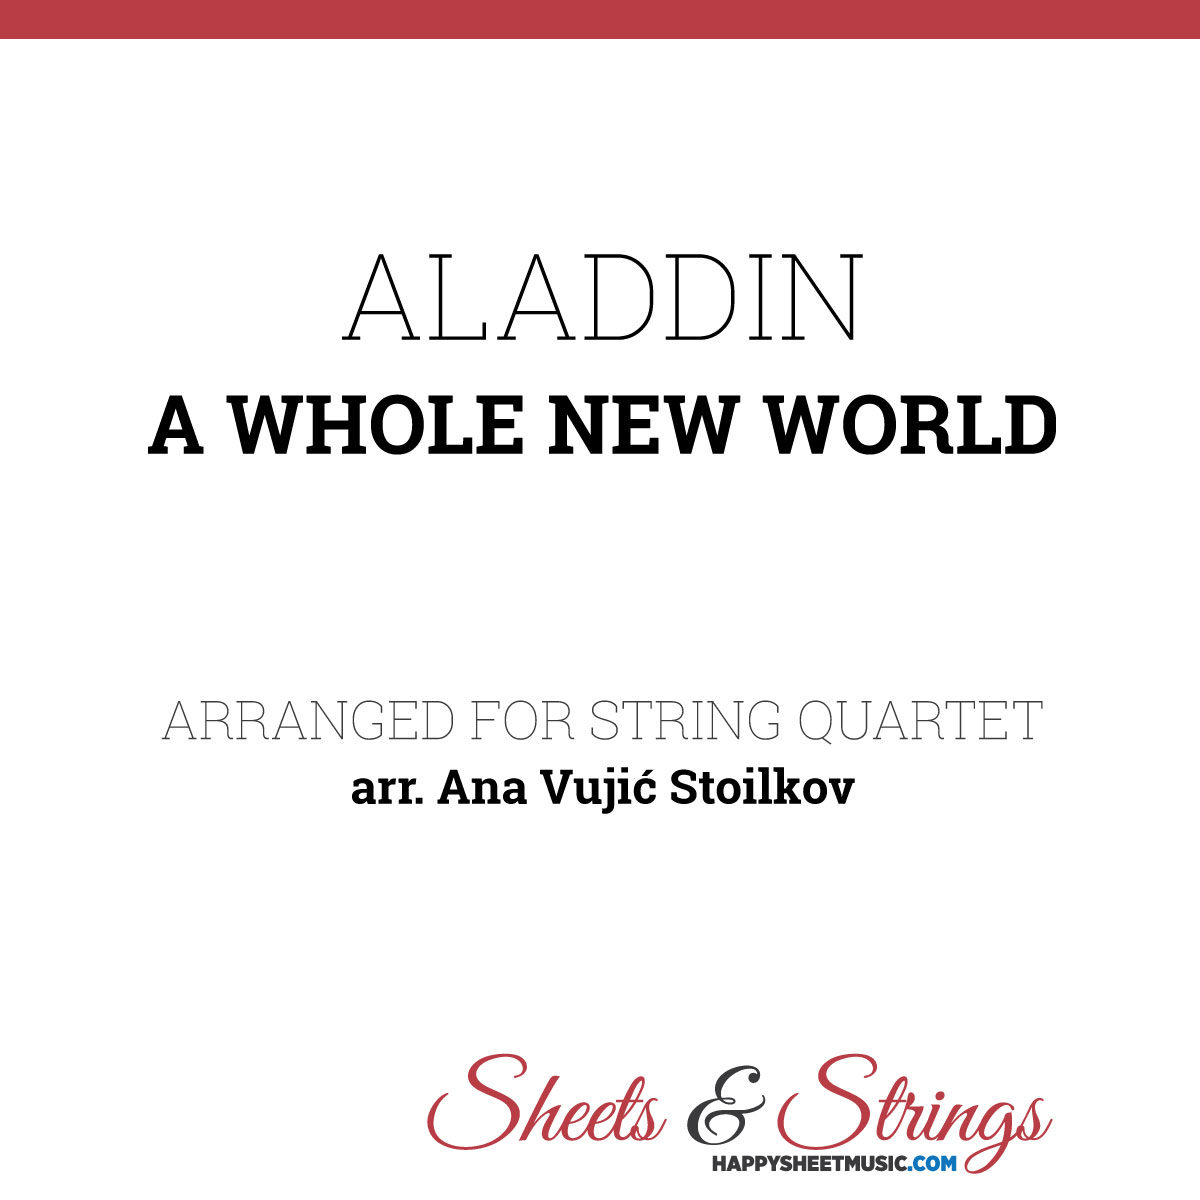 Aladdin - A whole new world Sheet Music for String Quartet